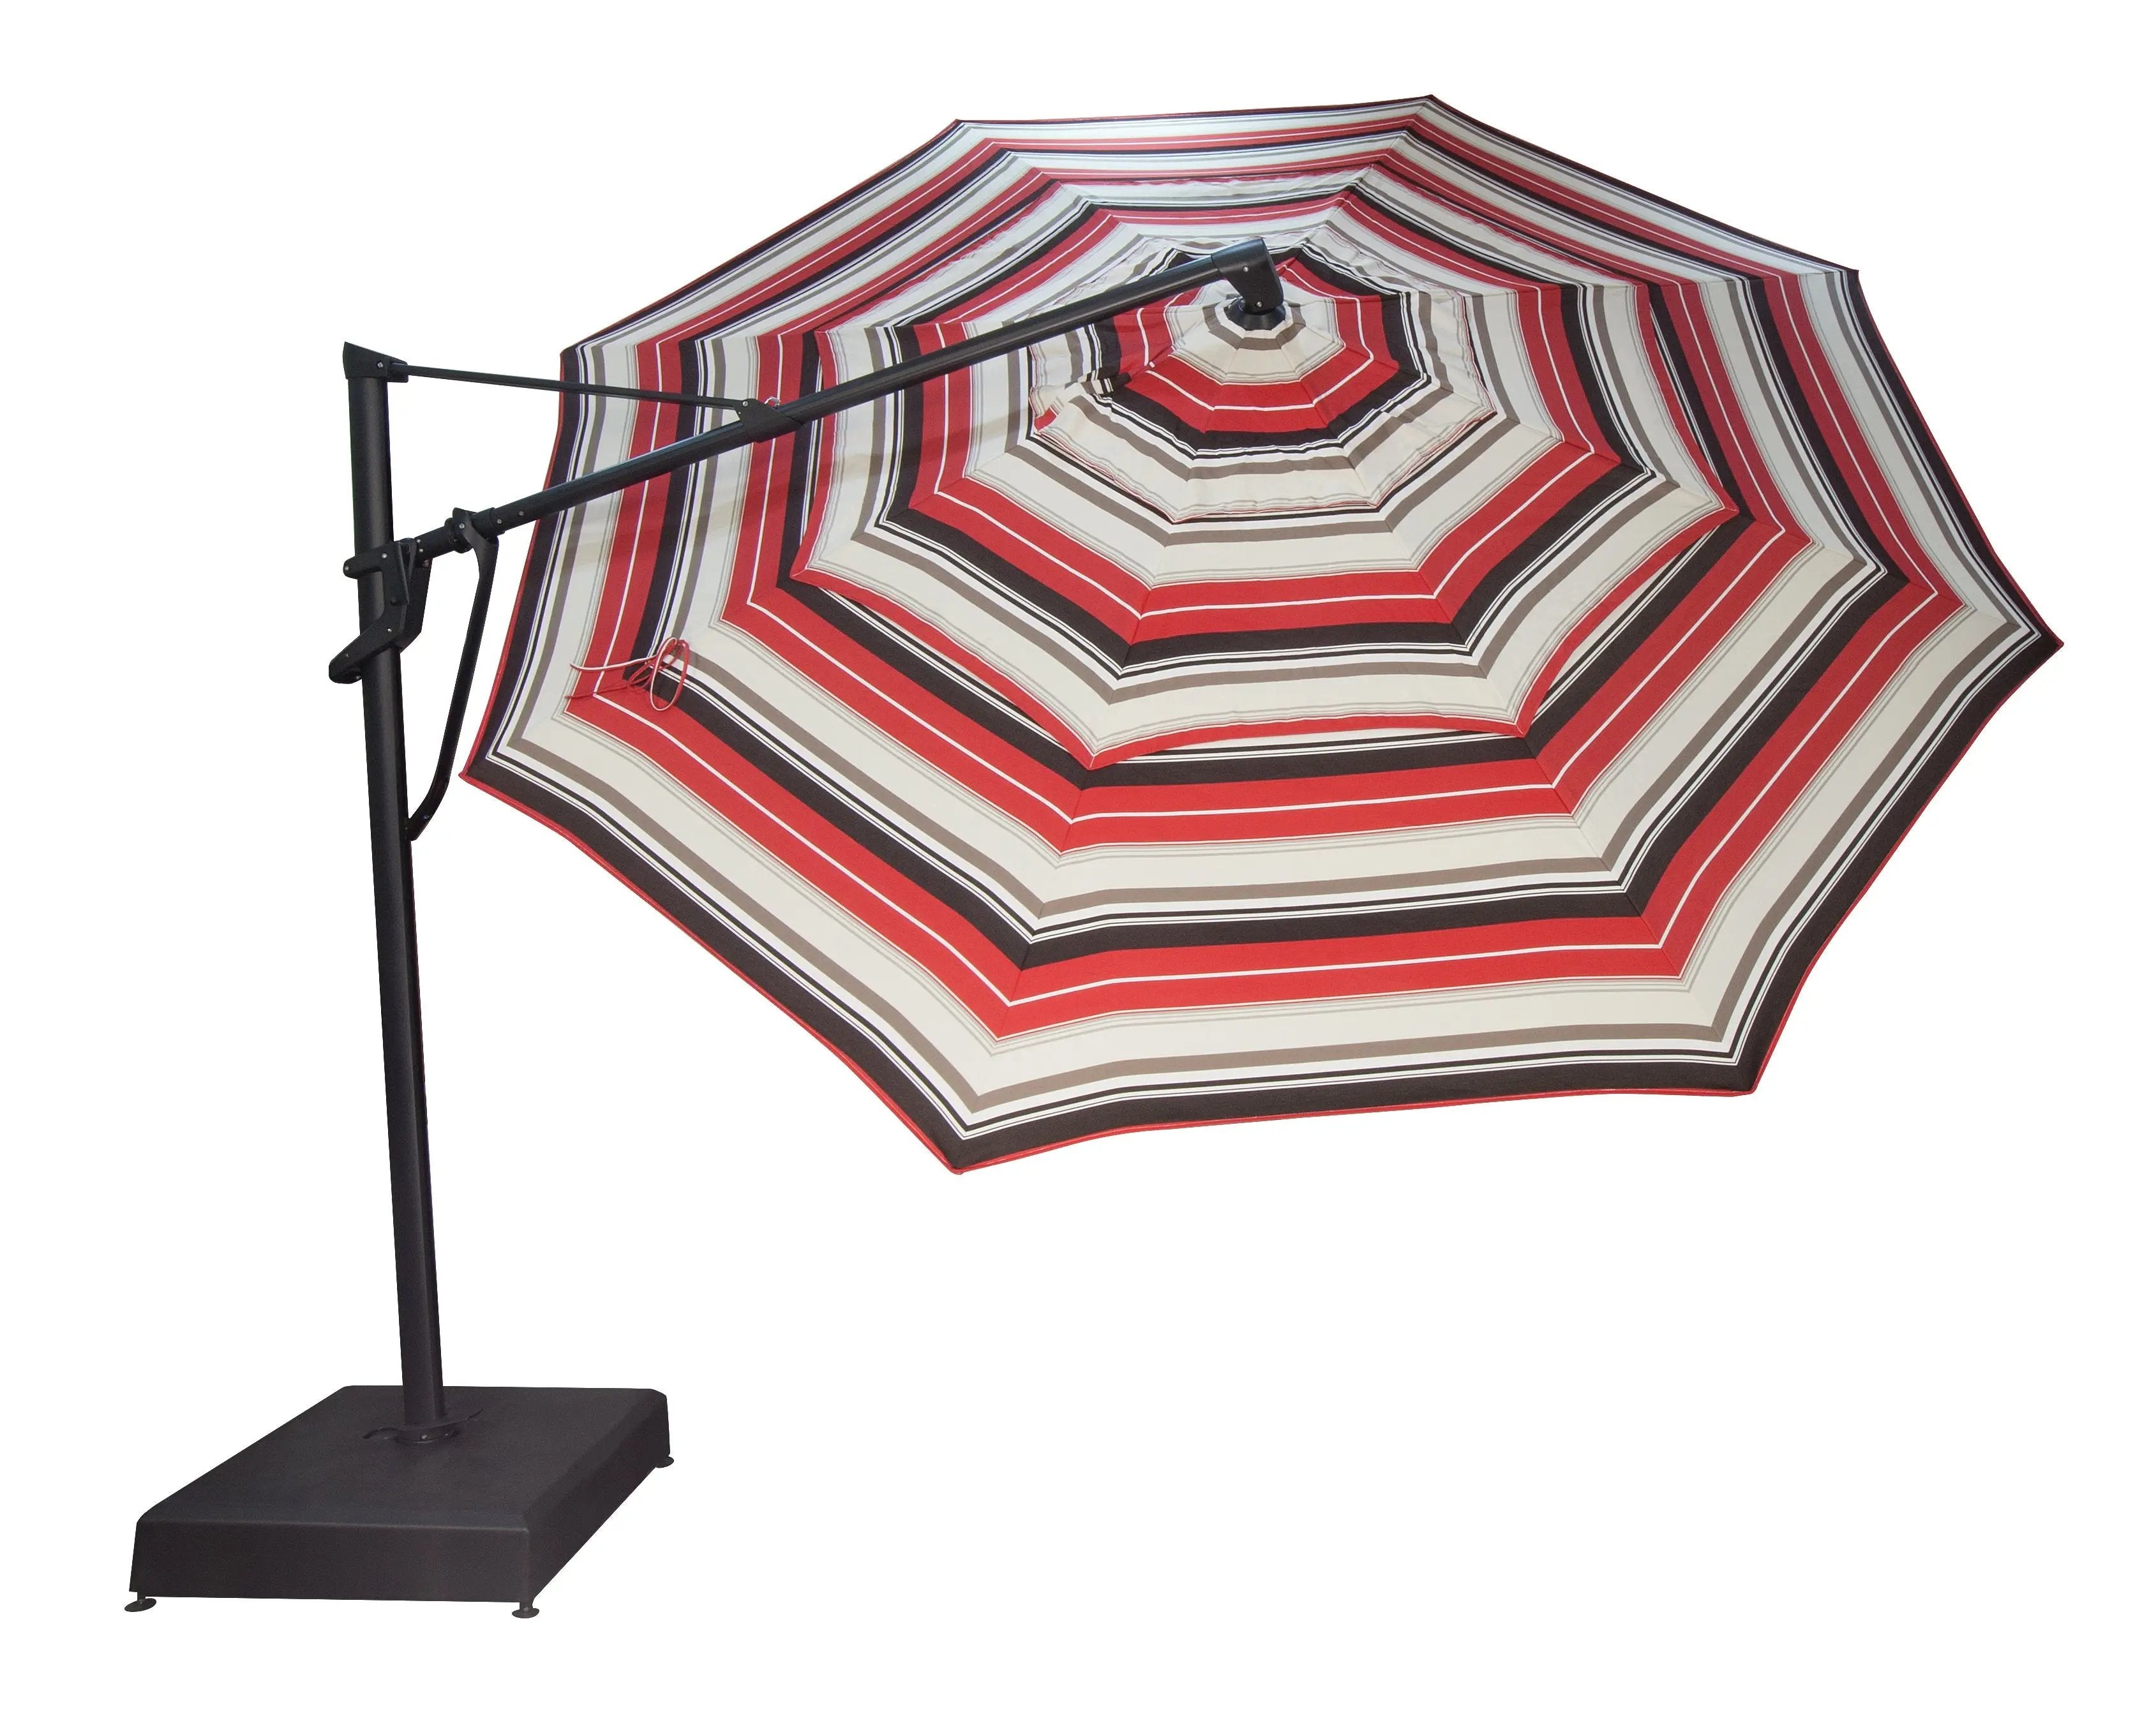 13' AKZ PLUS Octagonal Cantilever Umbrella